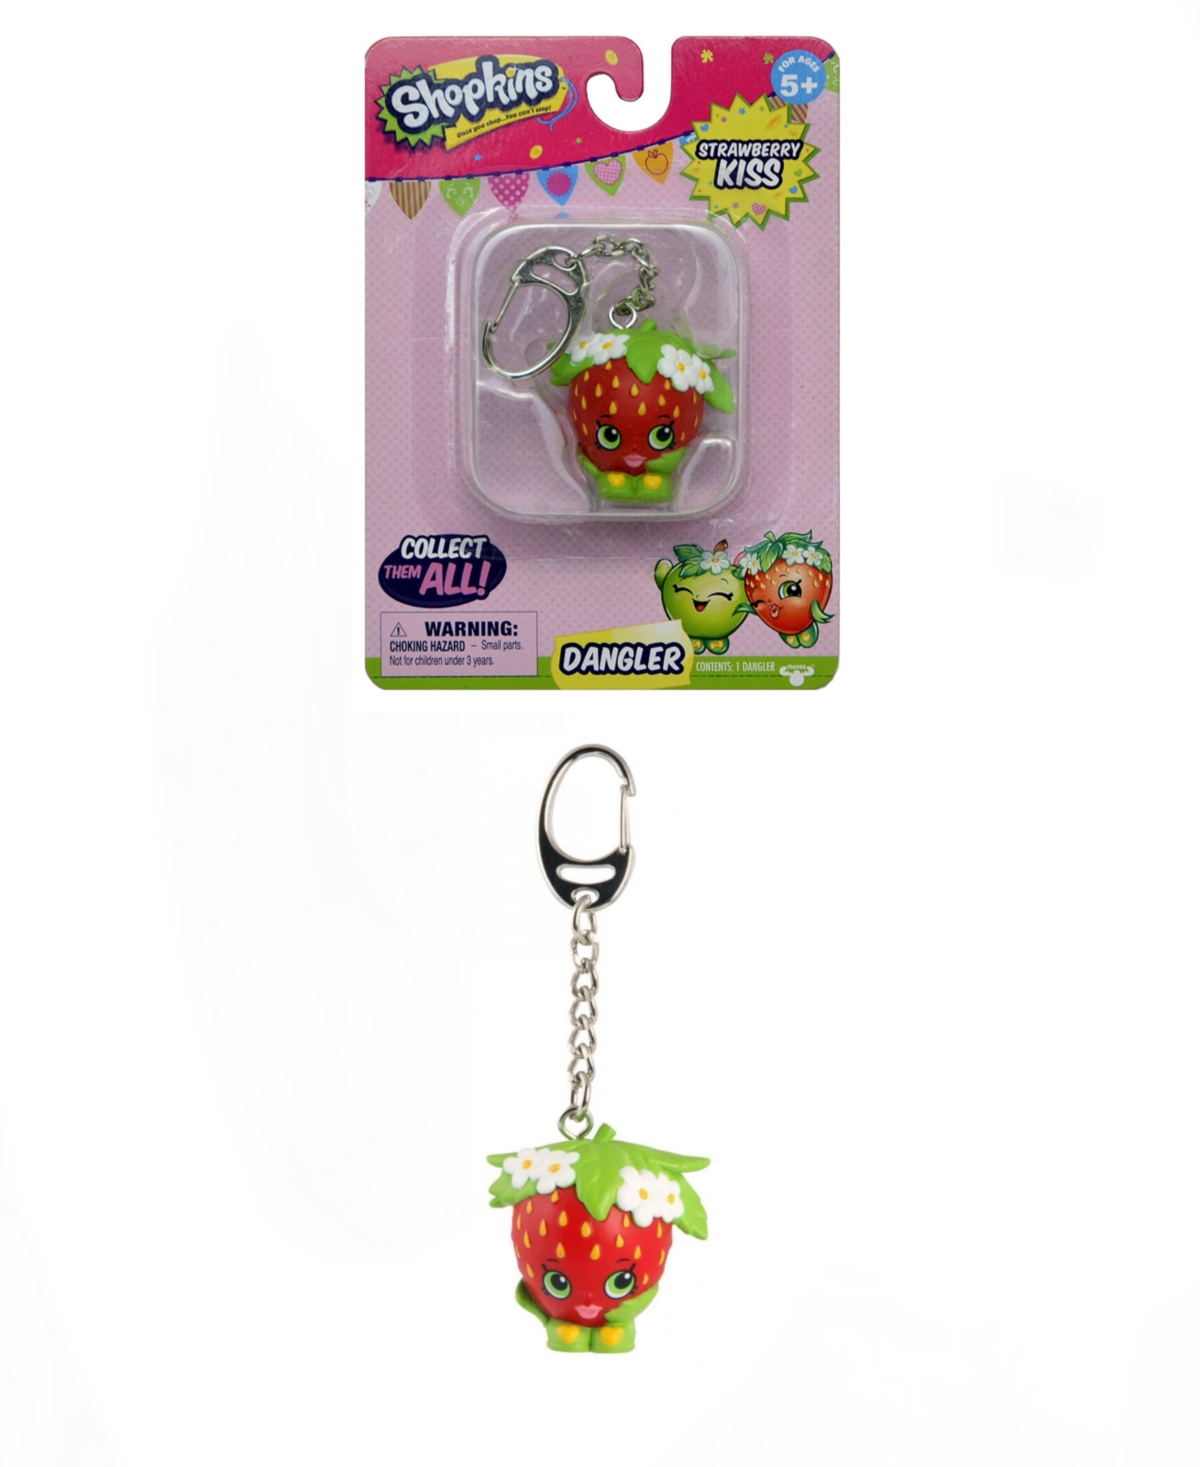 Shopkins Kids' Dangler Strawberry Kiss Single Pack Keychain In Multi Colored